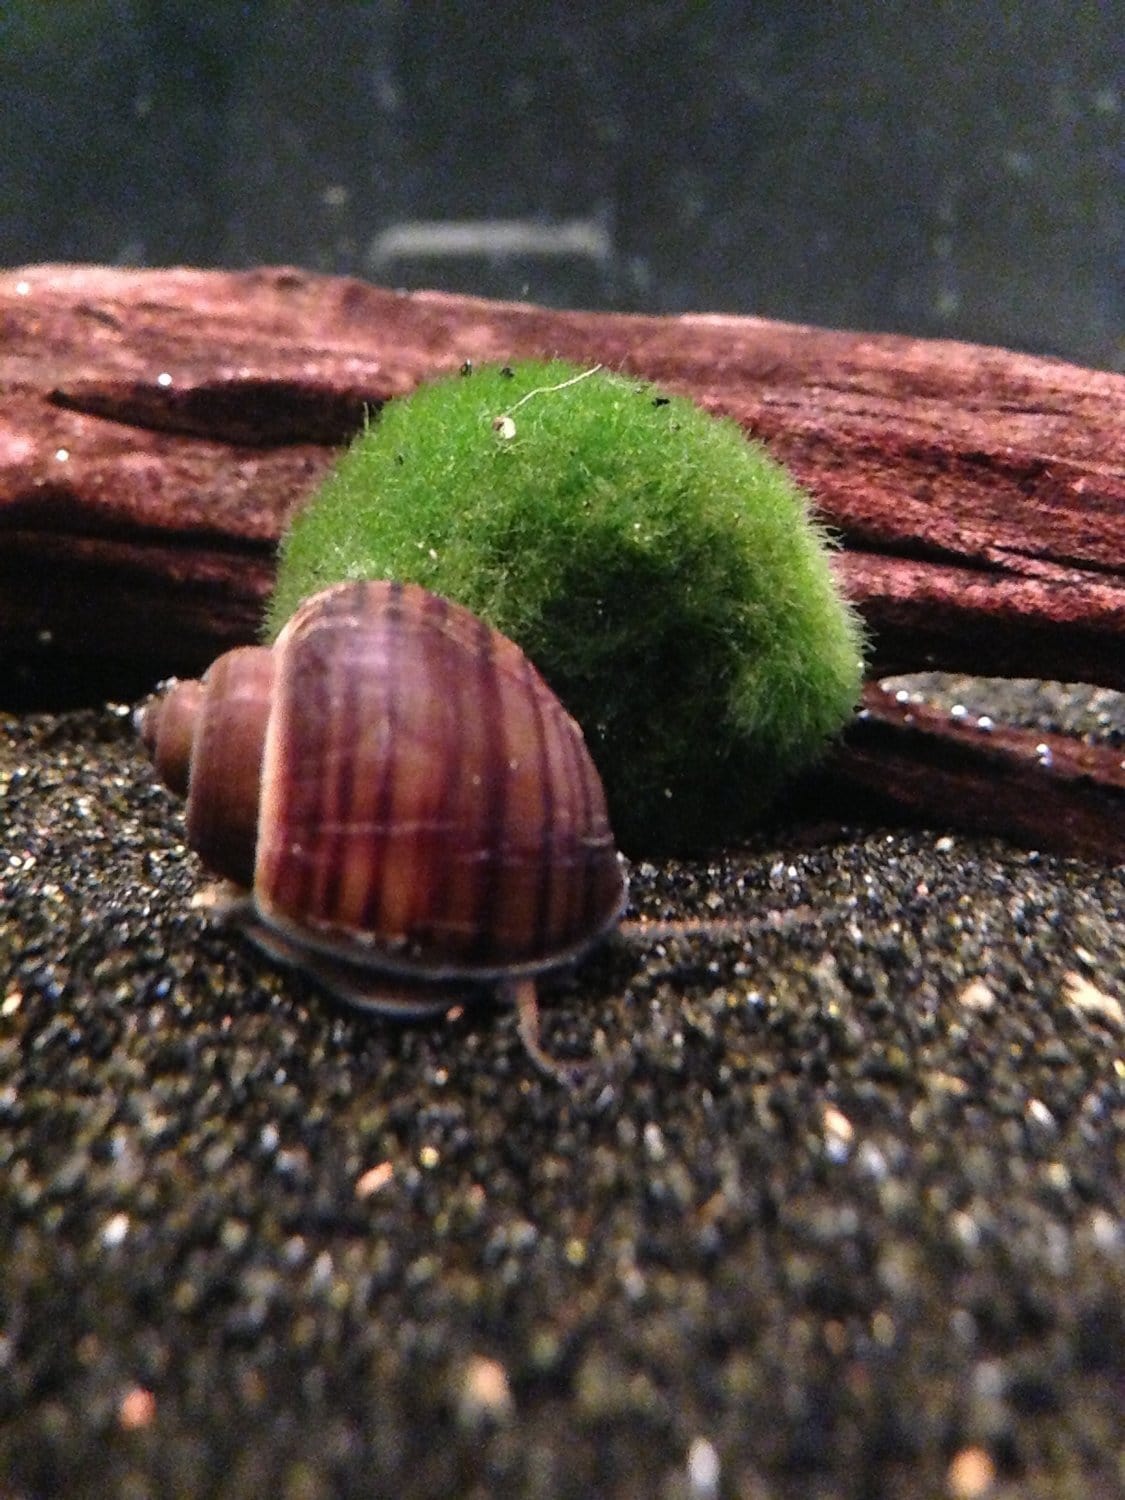 B-Grade Mystery Snail (Pomacea bridgesii) - Imperial Tropicals